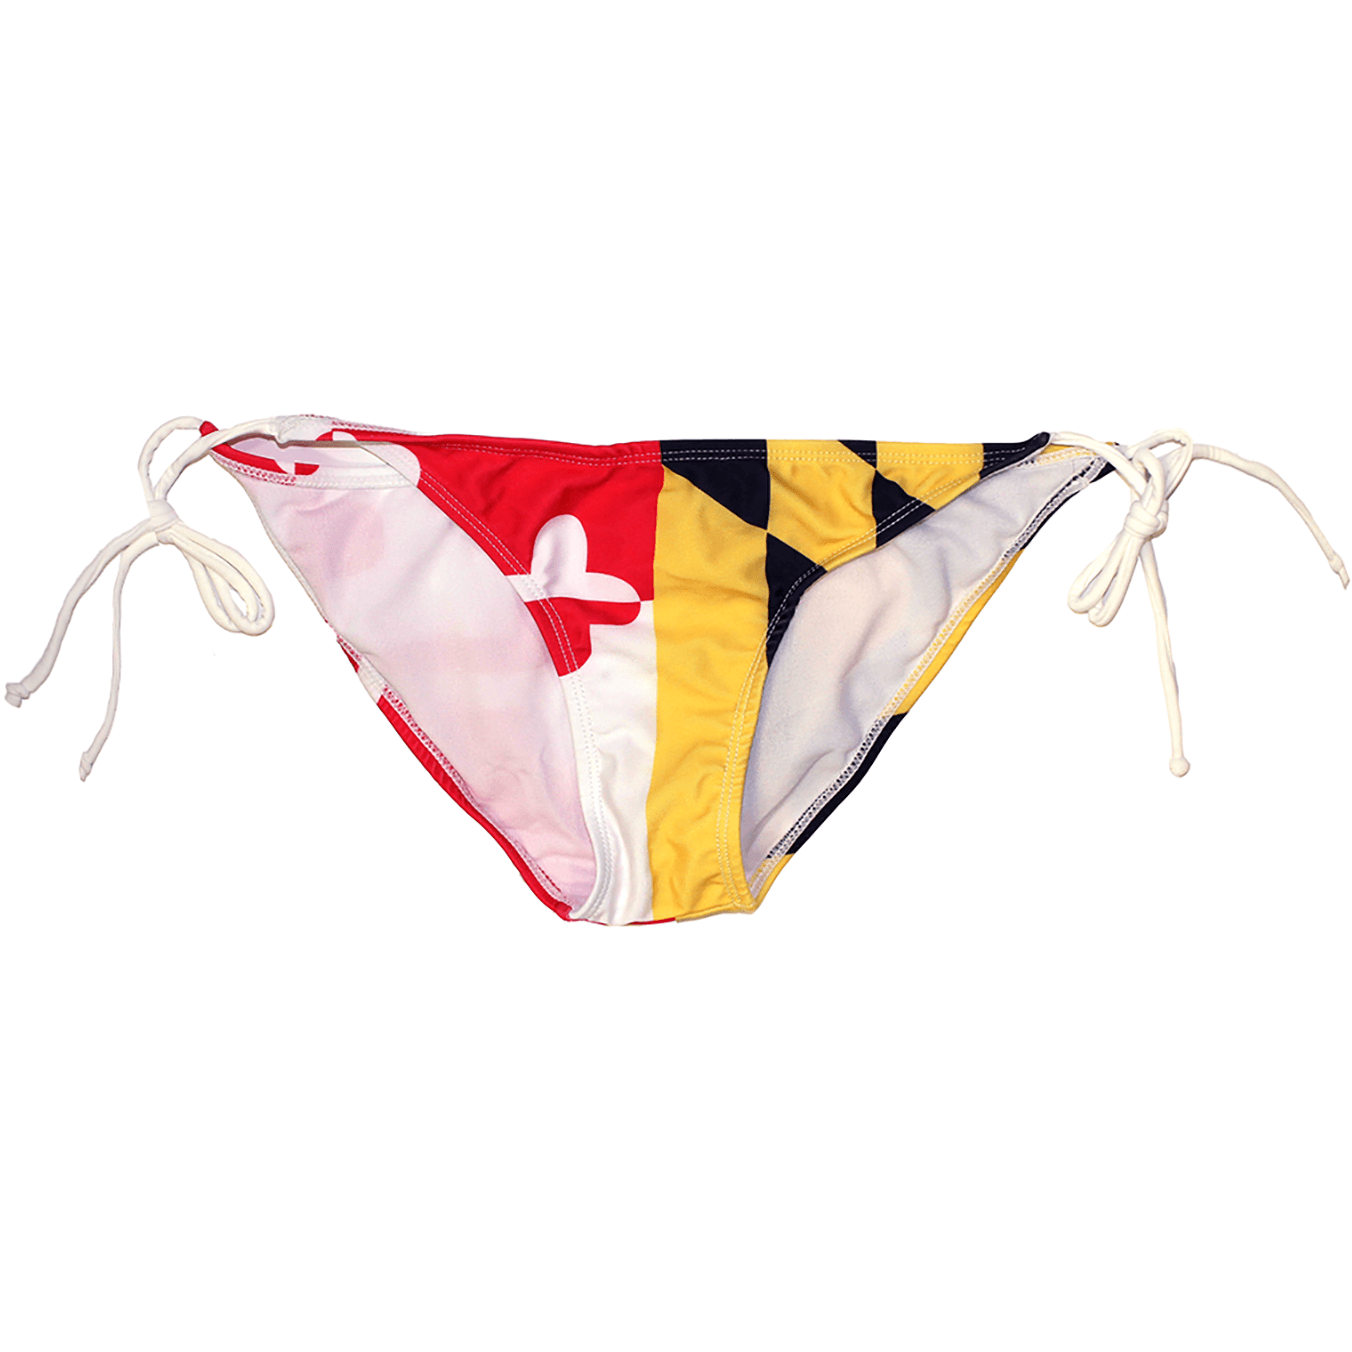 Maryland Flag (White Strings) / String Bikini Bottom - Route One Apparel